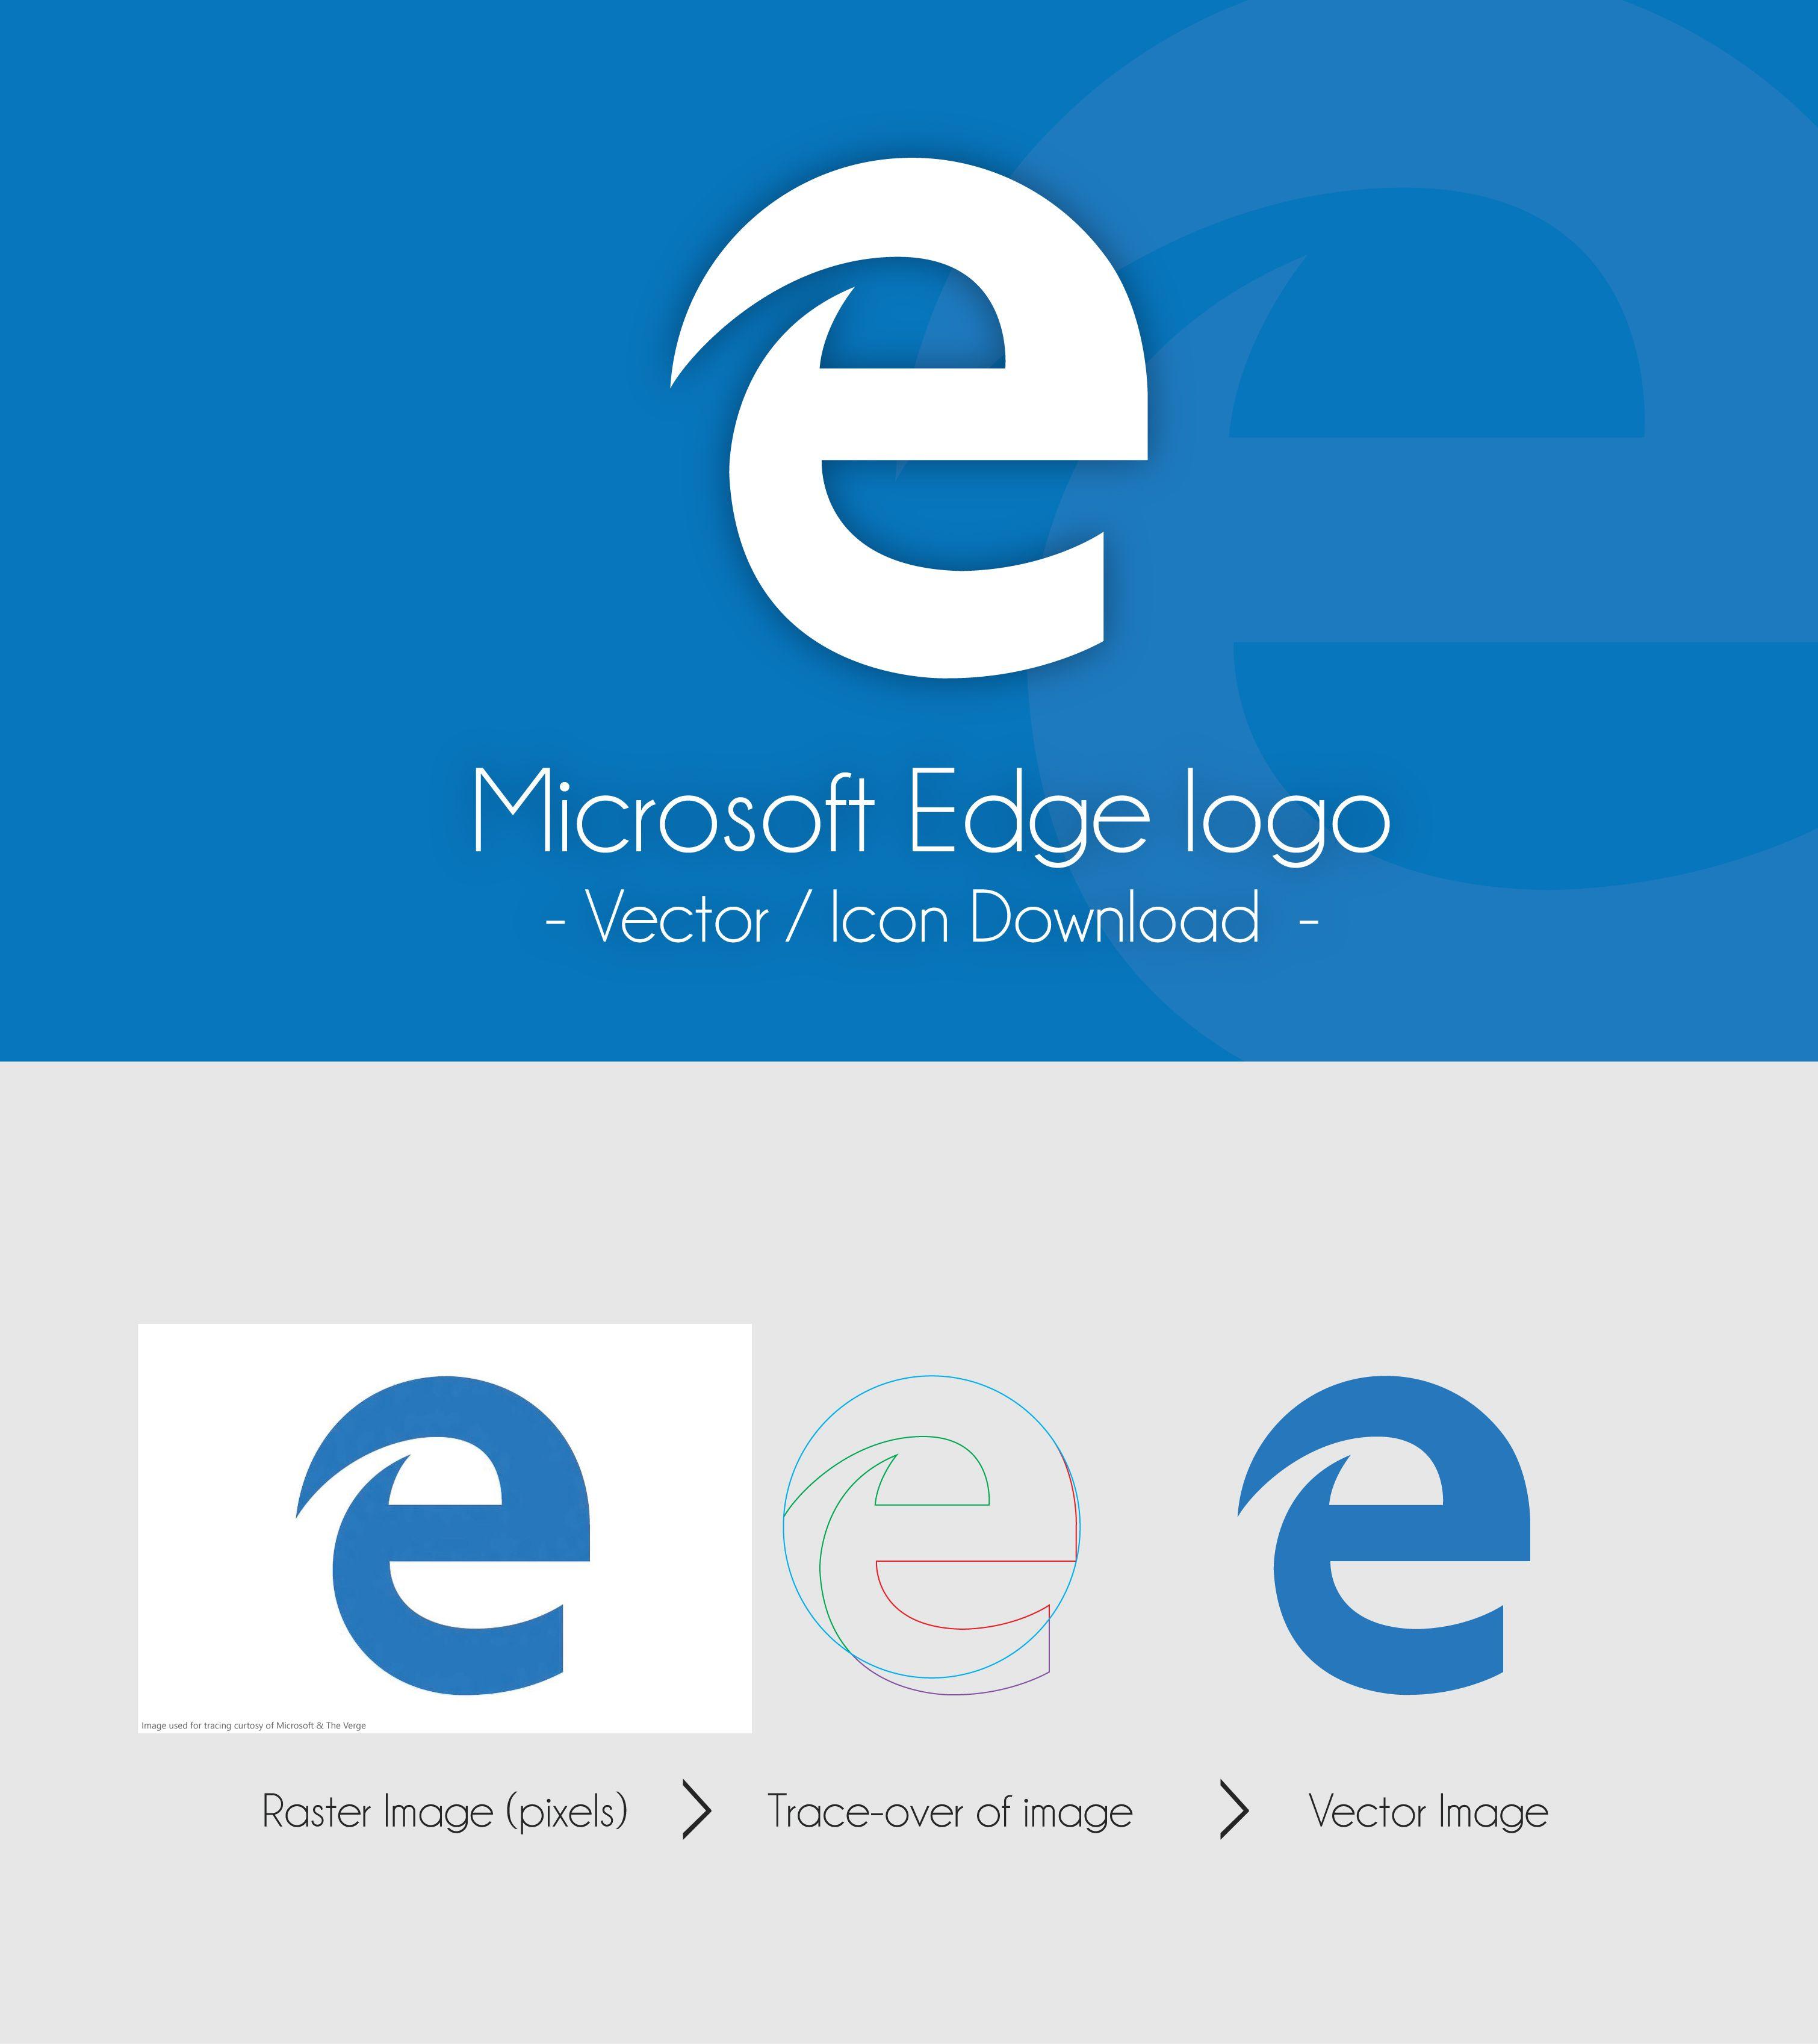 Microsoft Edge Logo - Microsoft Edge Logo - Icon and Vector Download by dAKirby309 on ...